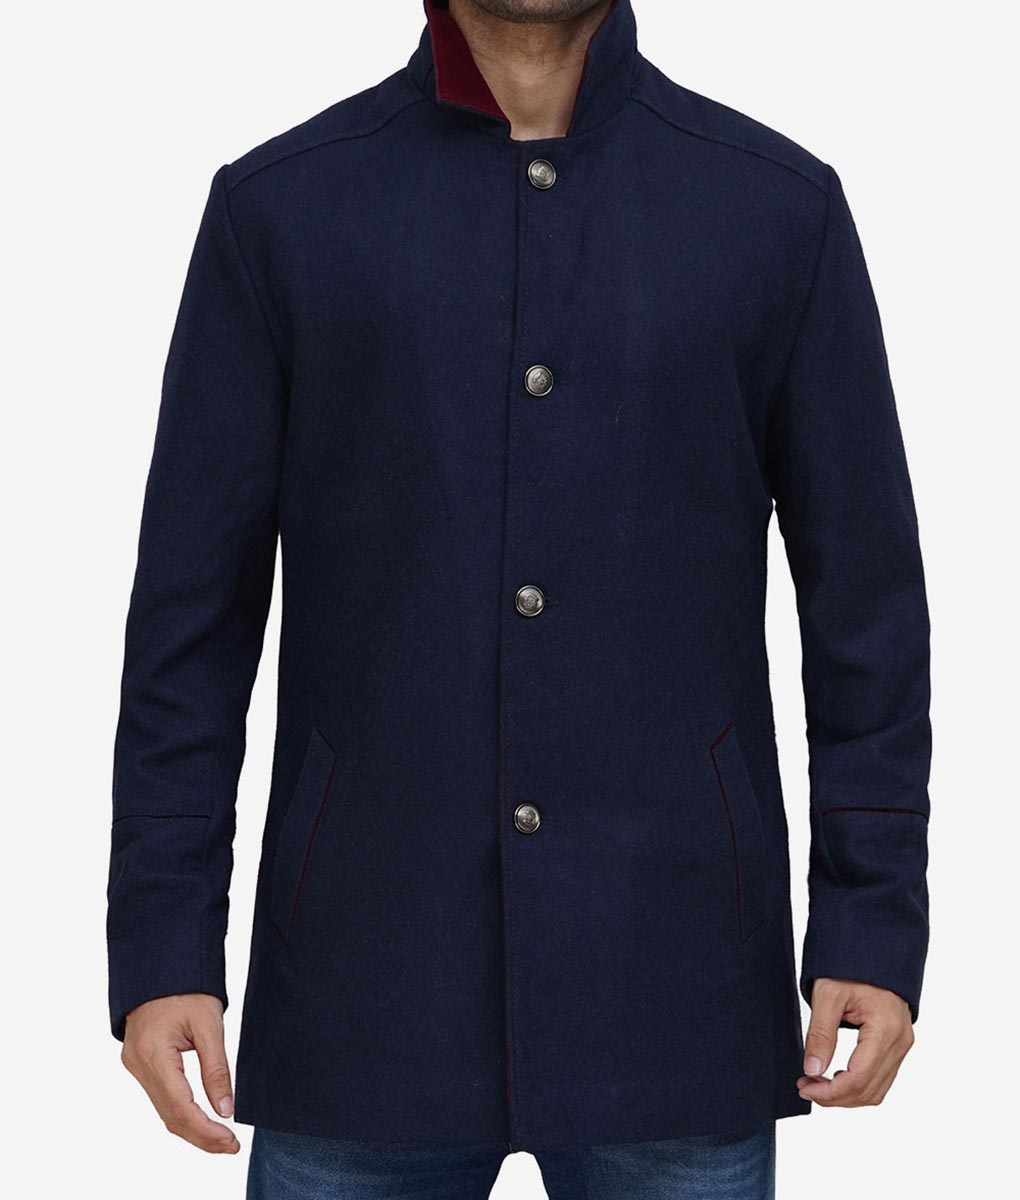 Tony Mens Navy Blue Wool Car Coat